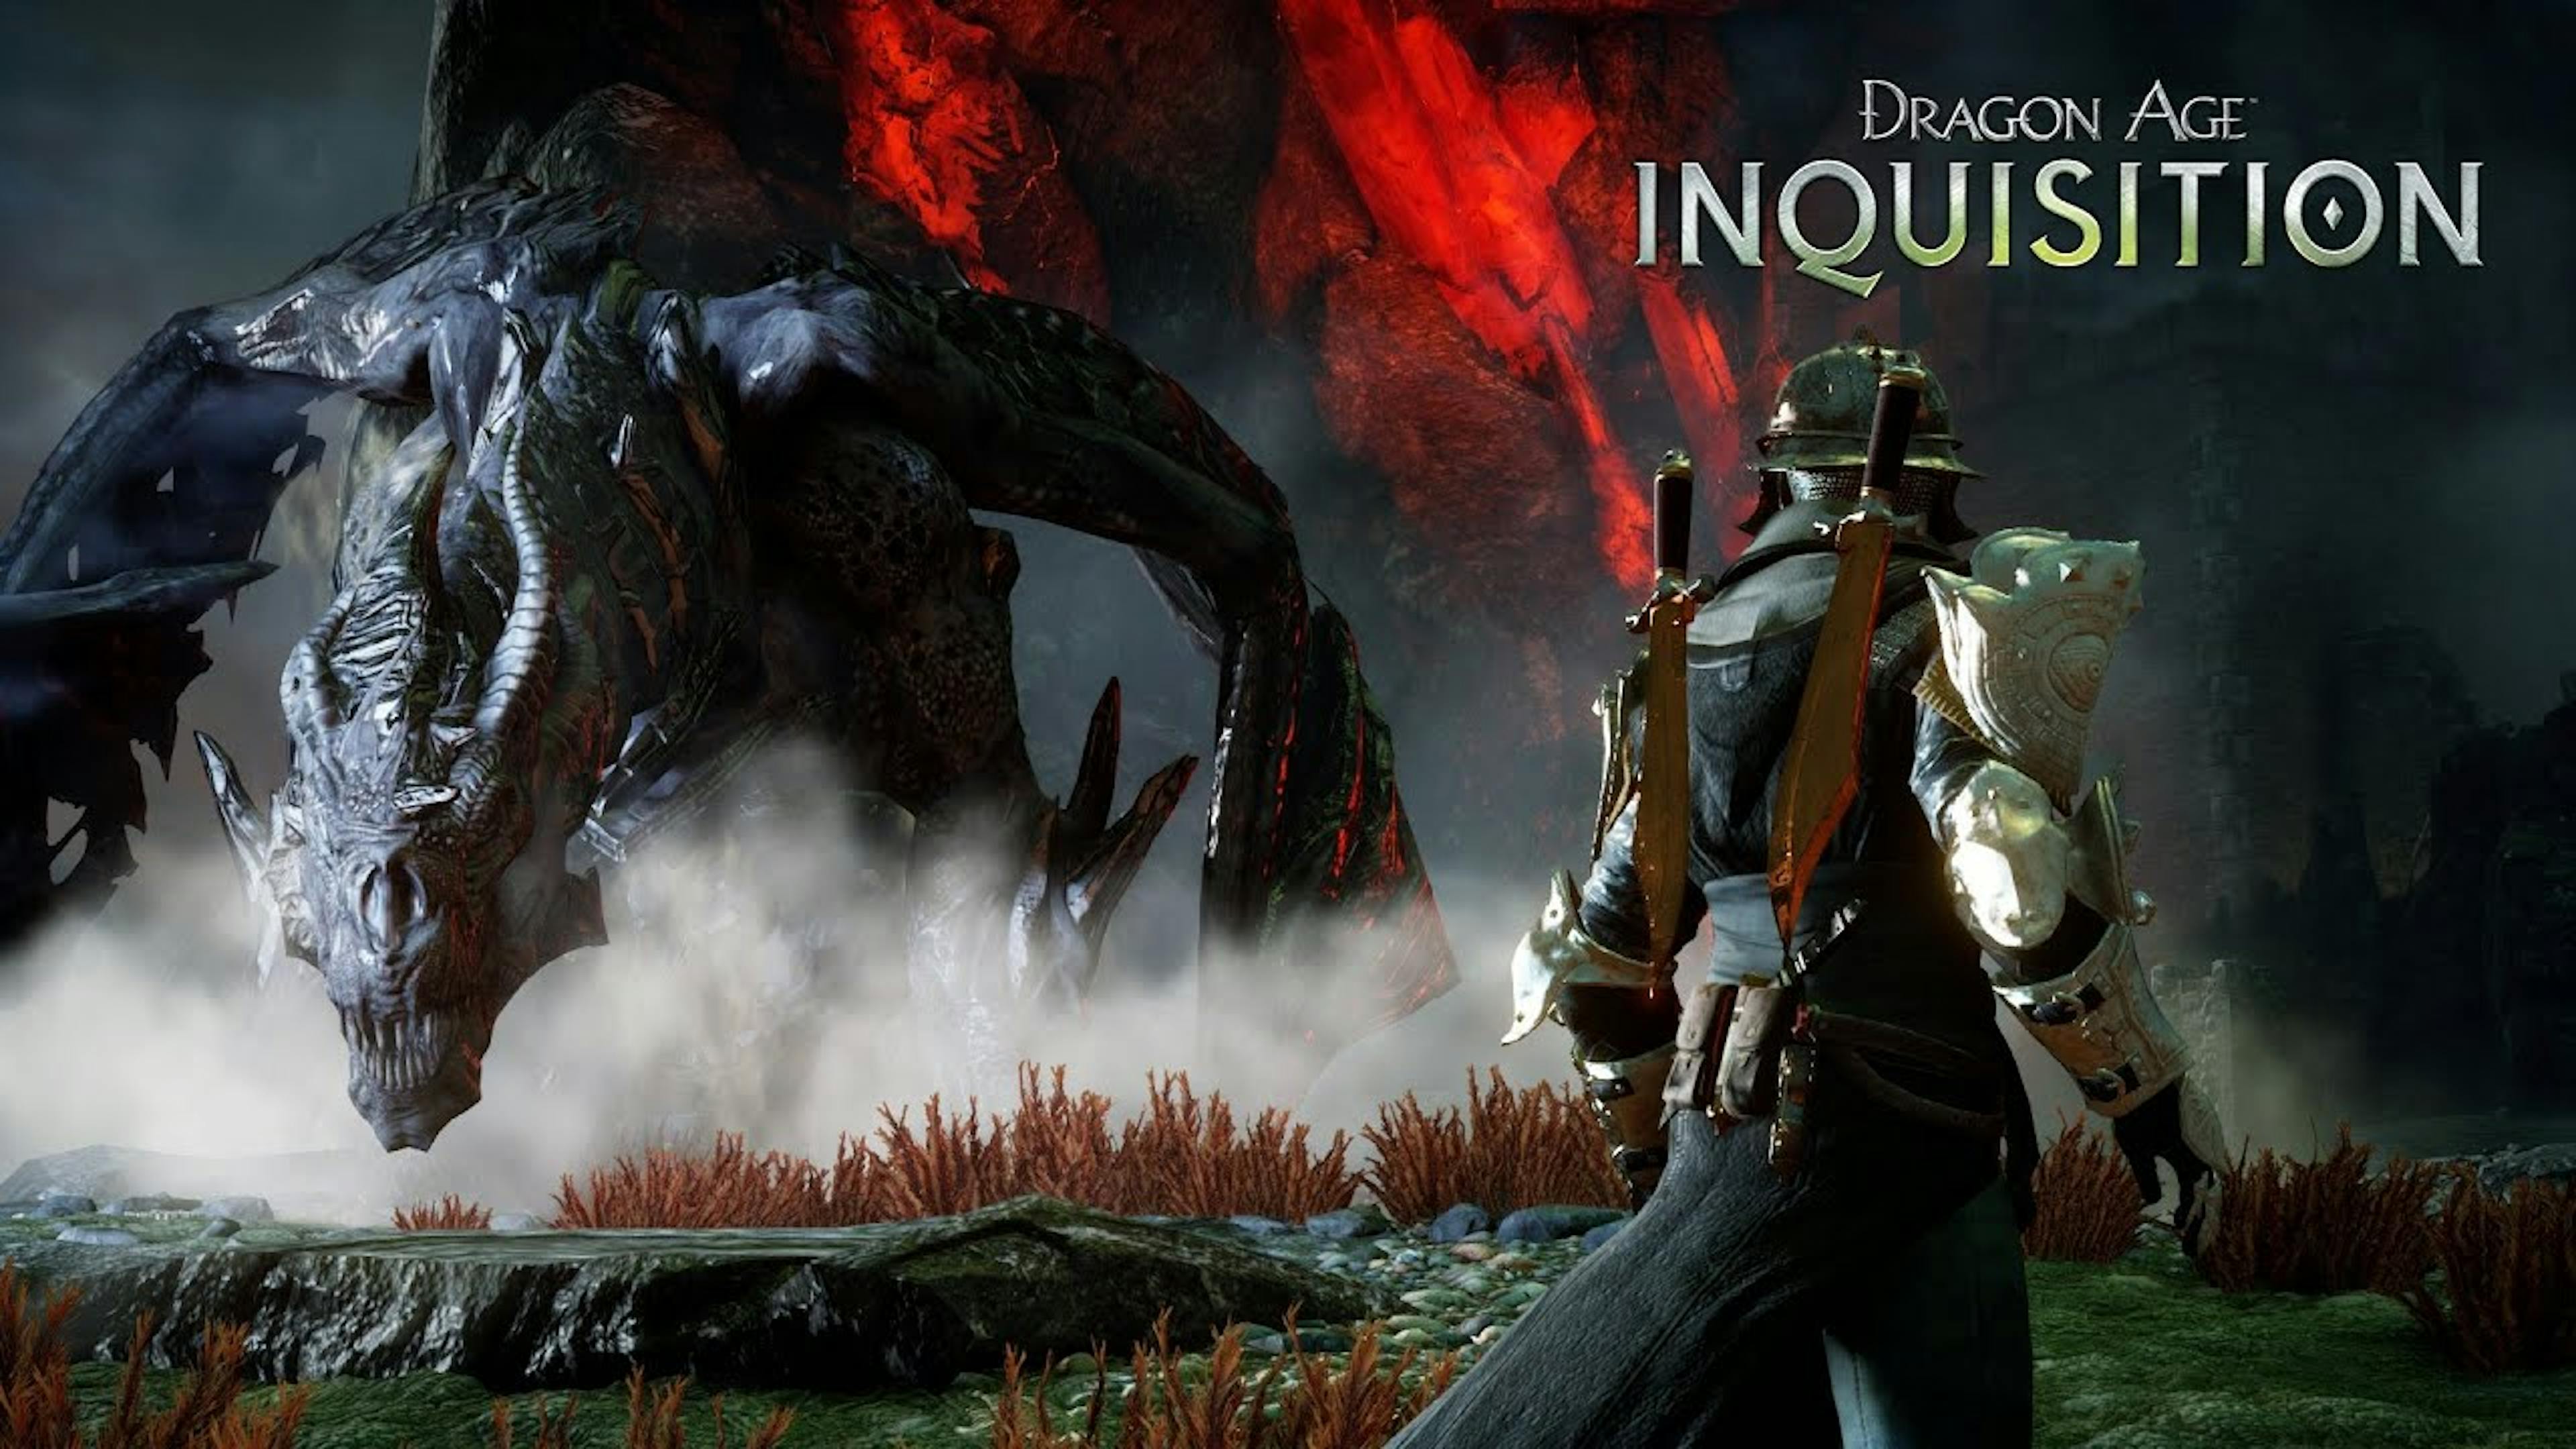 https://www.ea.com/games/dragon-age/dragon-age-inquisition